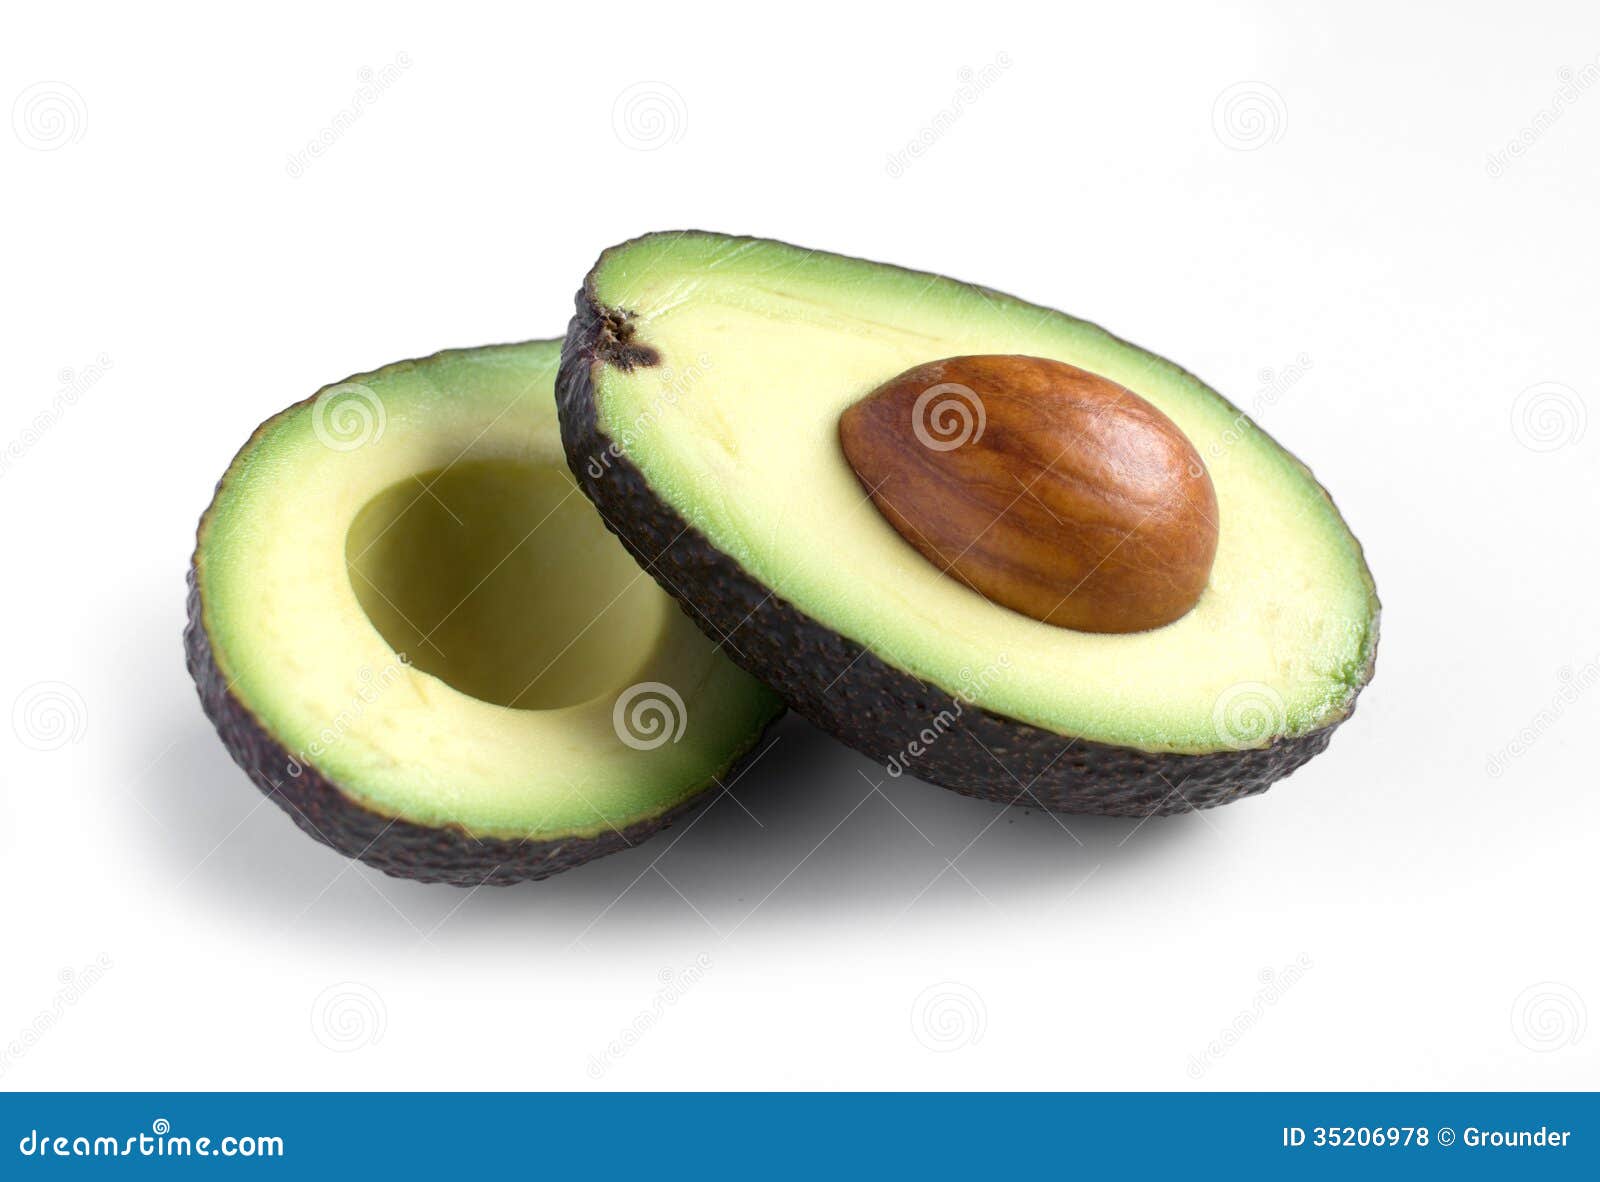 How do you cut an avocado?